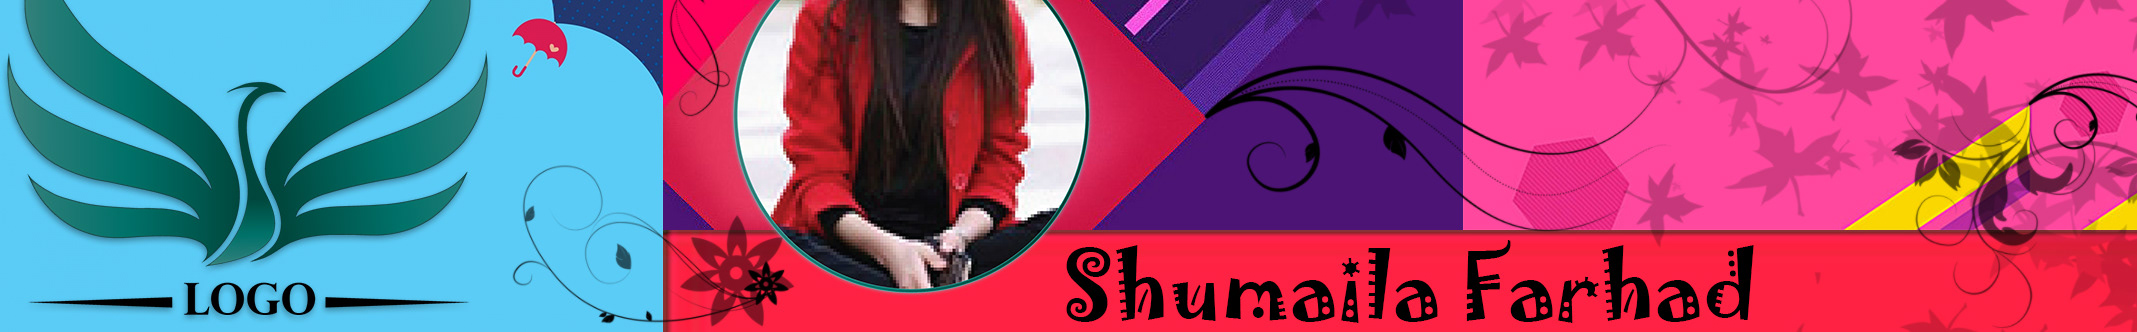 Shumaila Farhad's profile banner